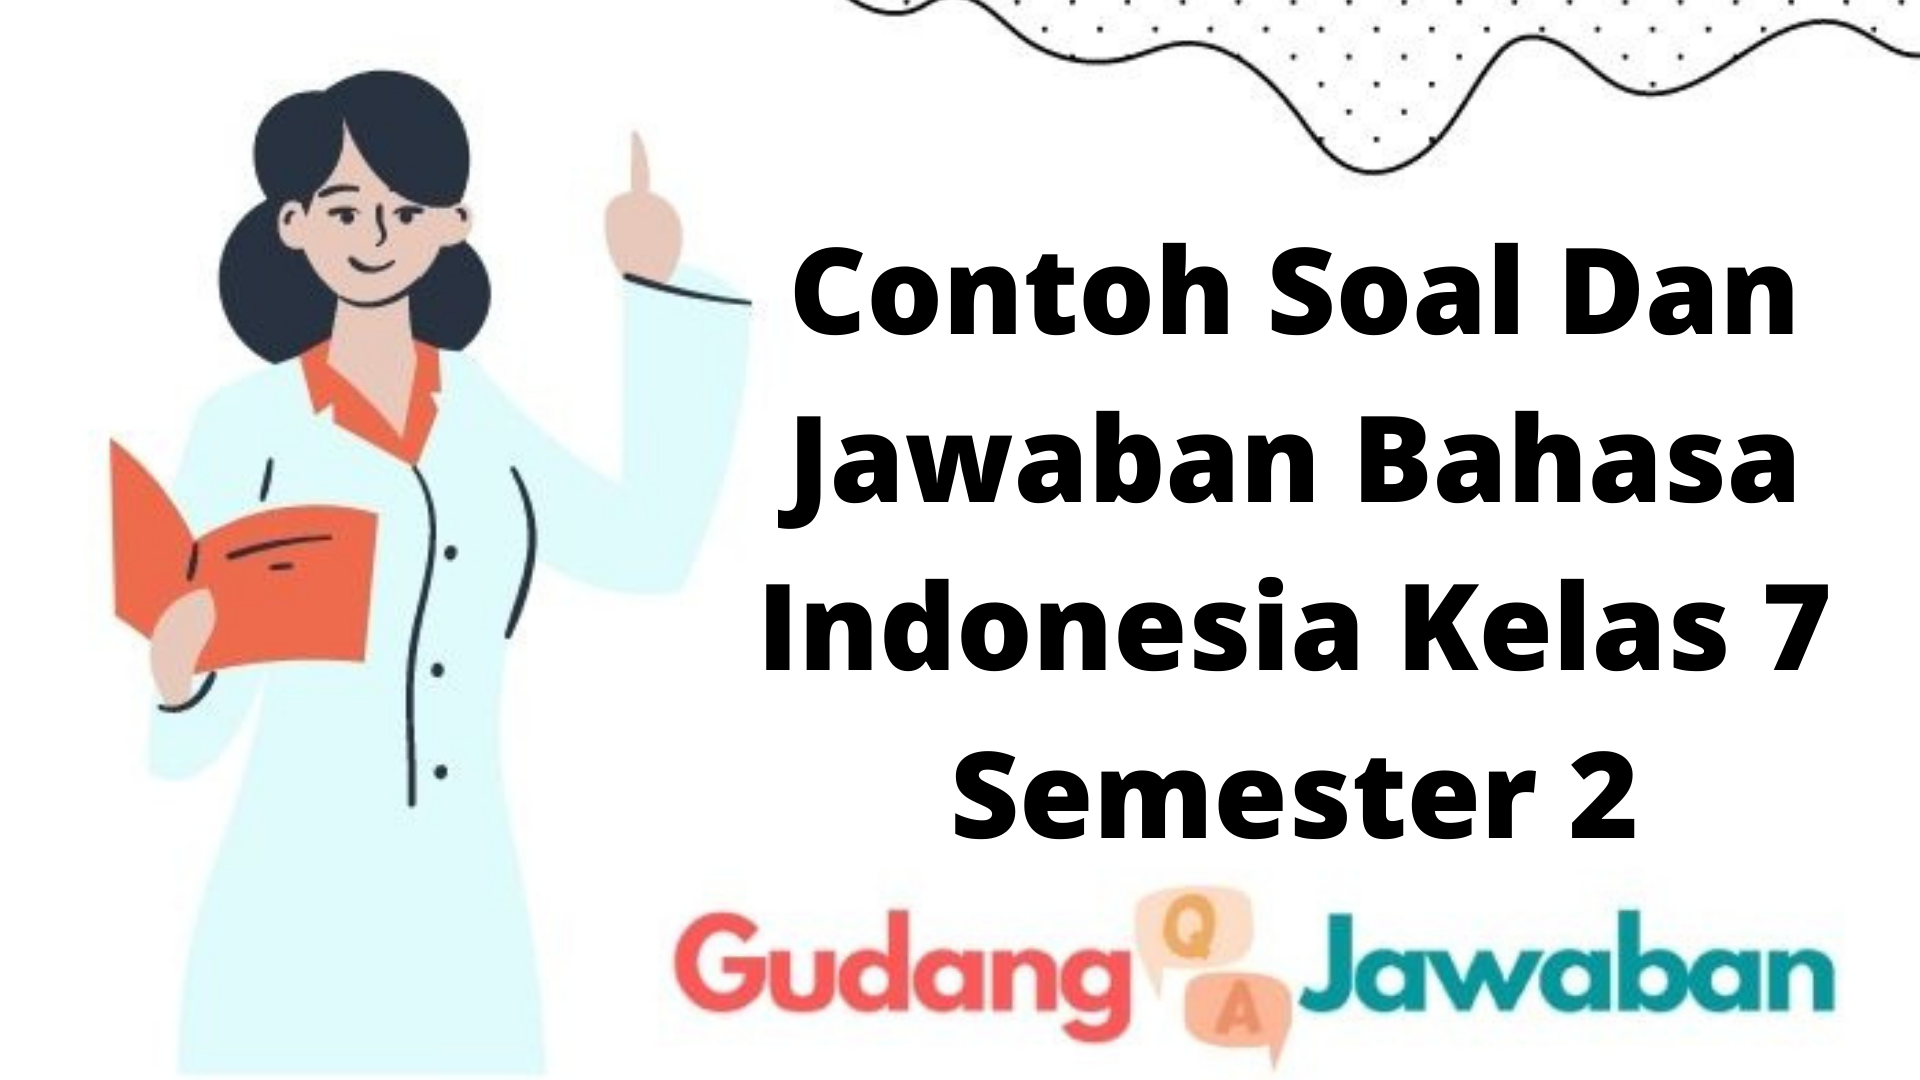 Contoh Soal Dan Jawaban Bahasa Indonesia Kelas 7 Semester 2